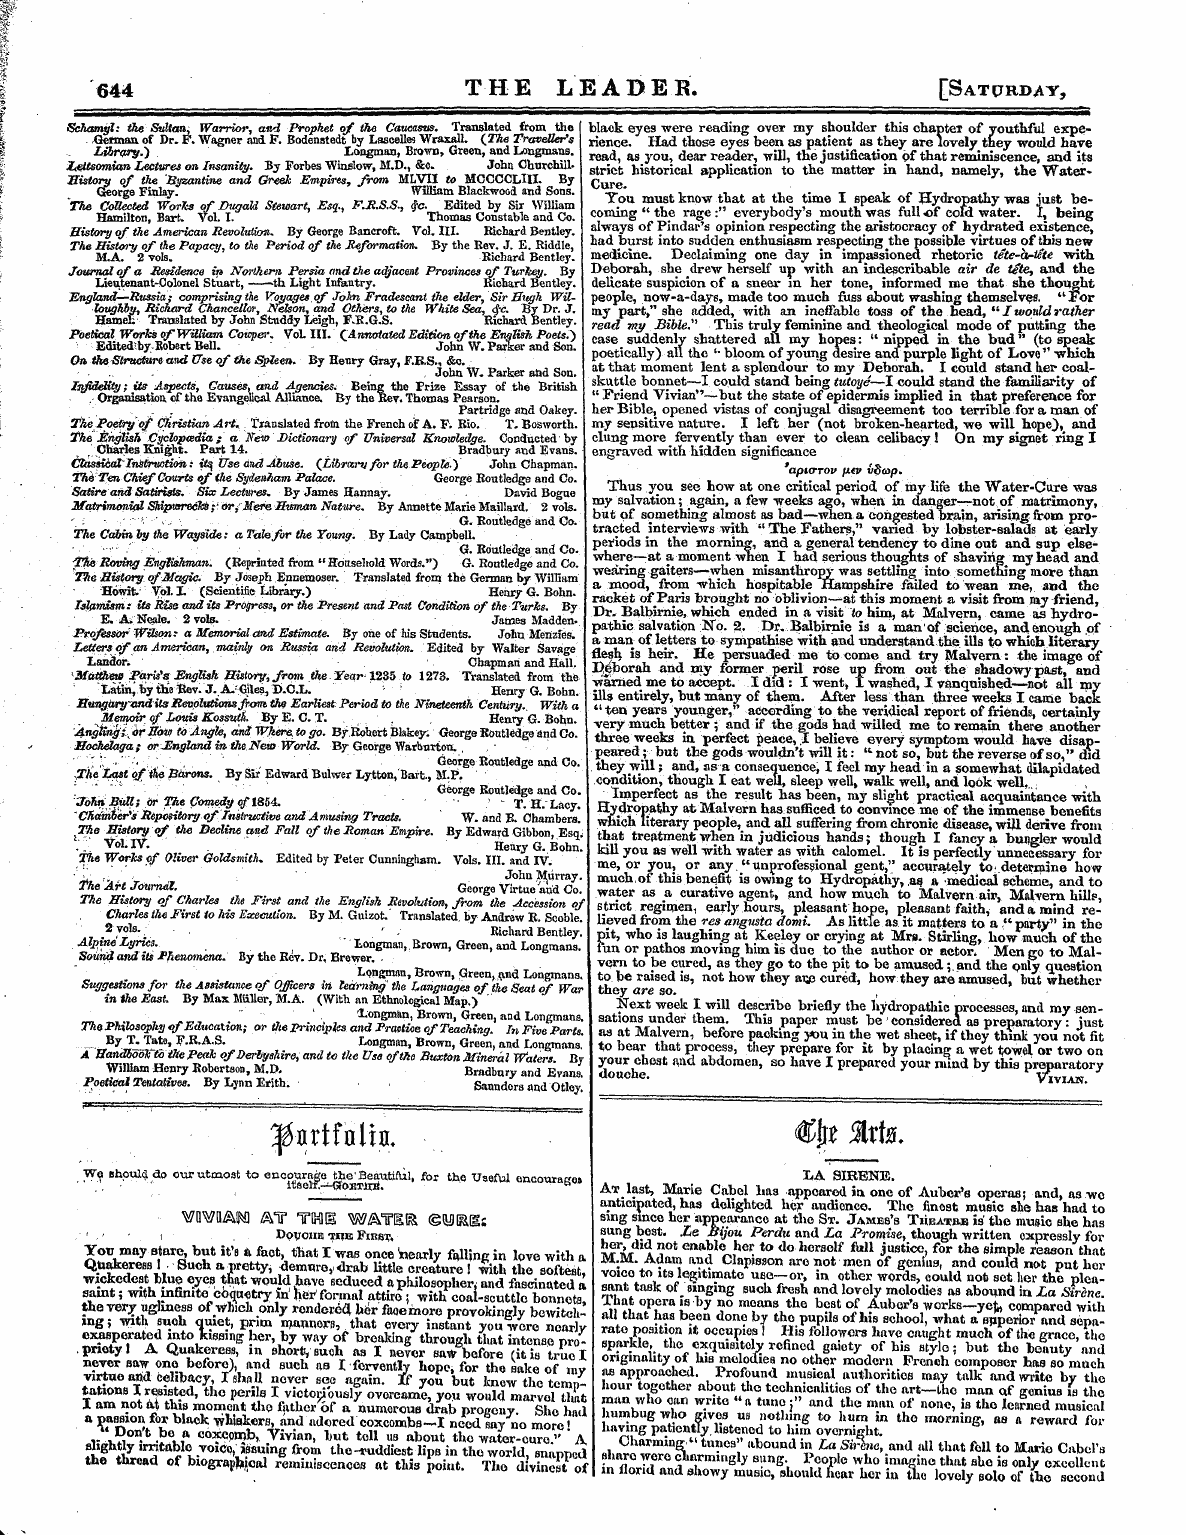 Leader (1850-1860): jS F Y, 2nd edition - Ar02000